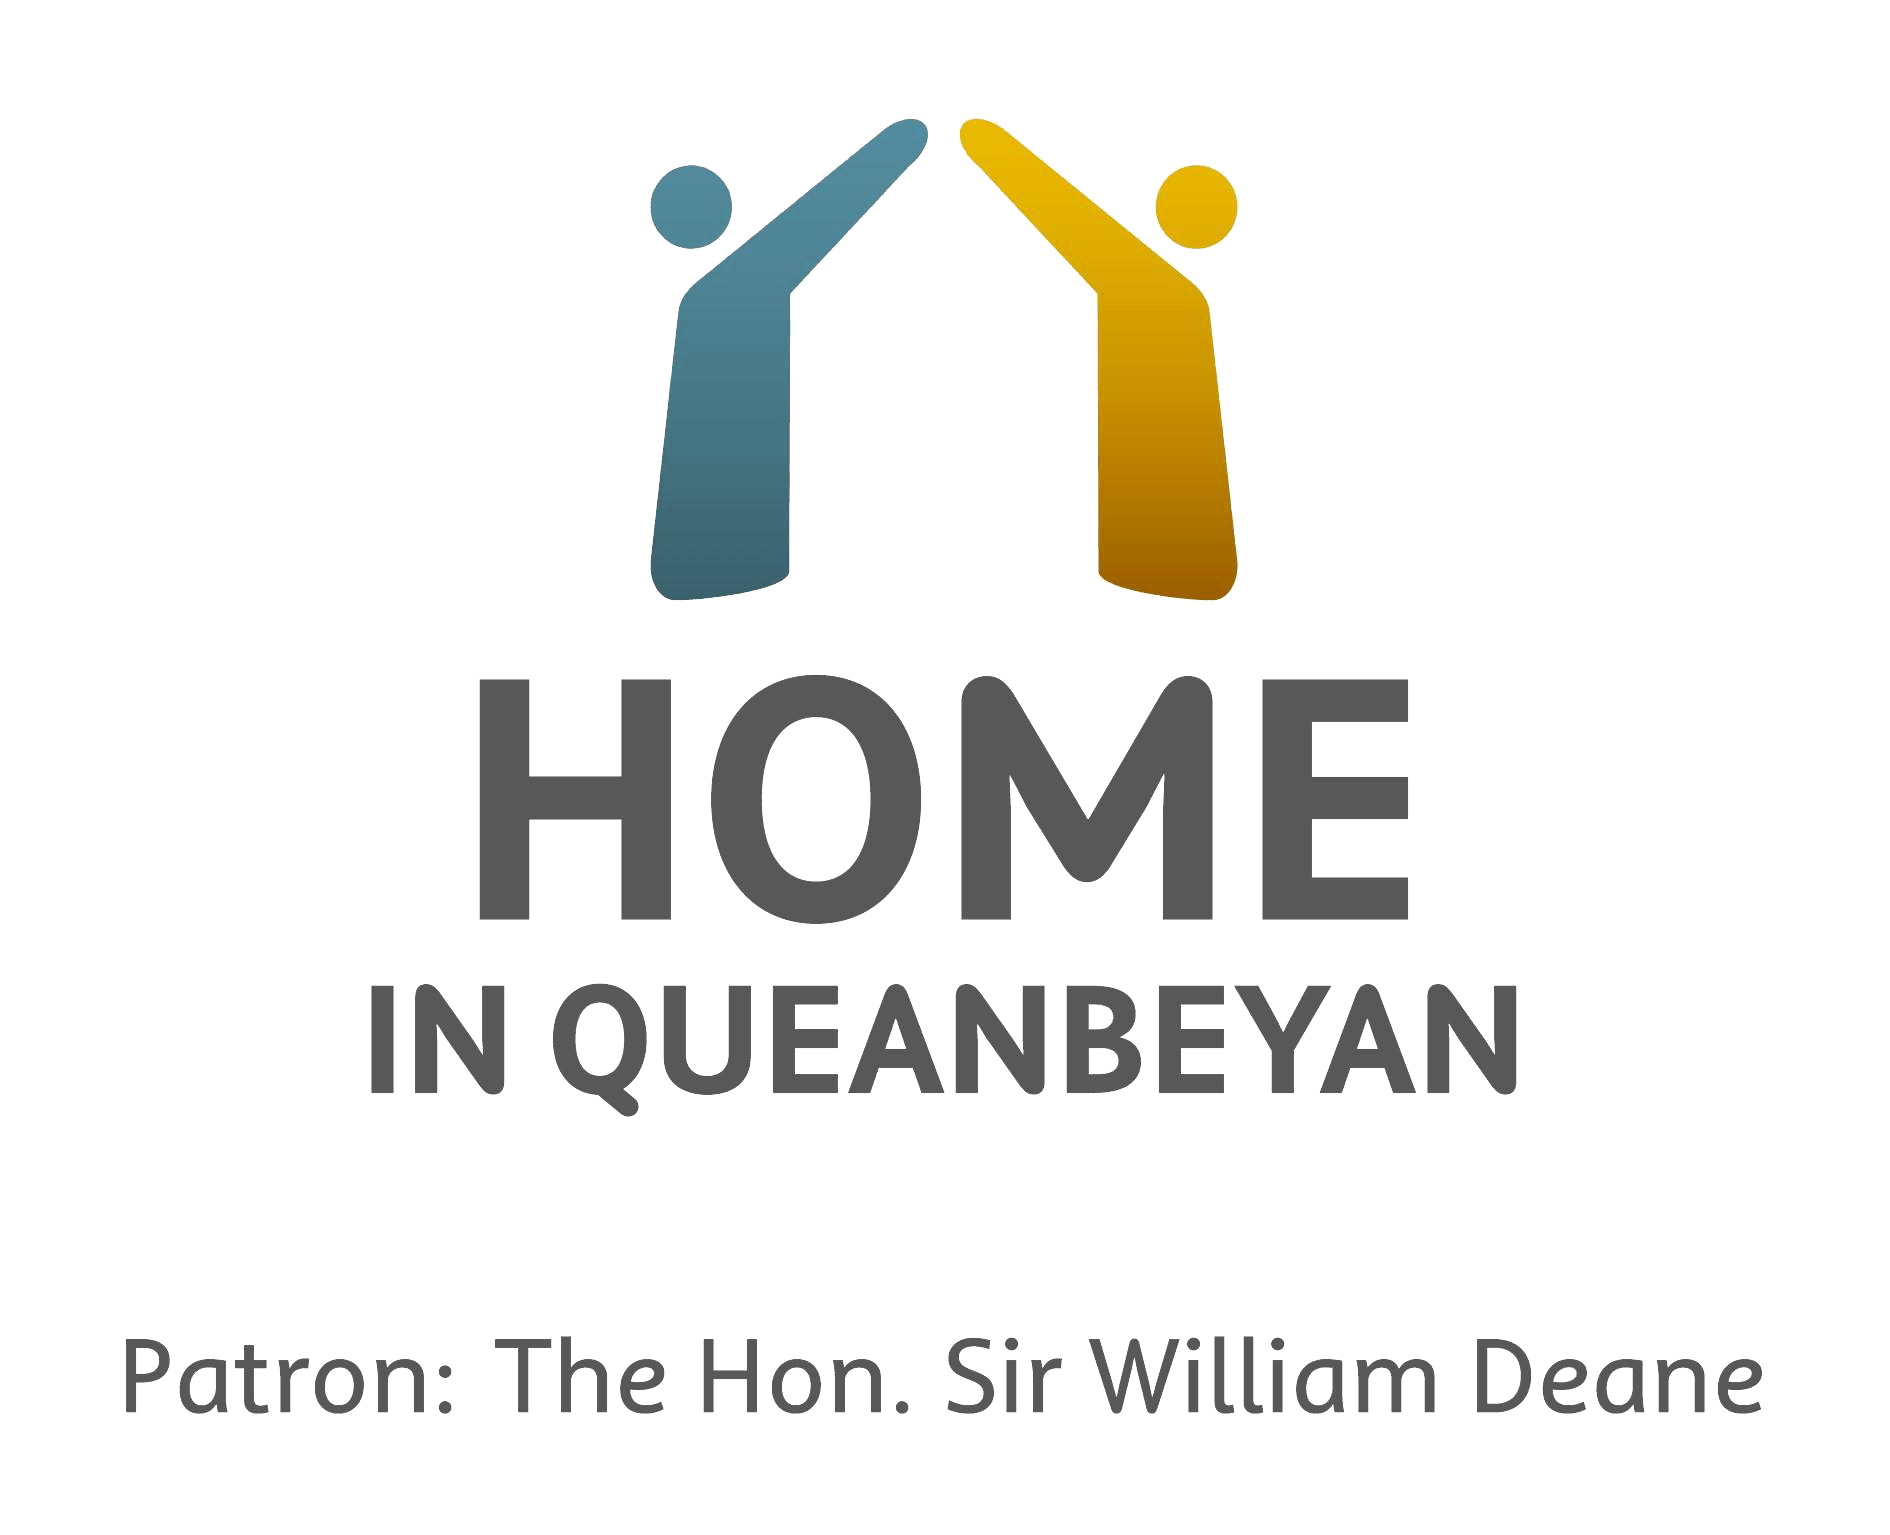 HOME in Queanbeyan logo